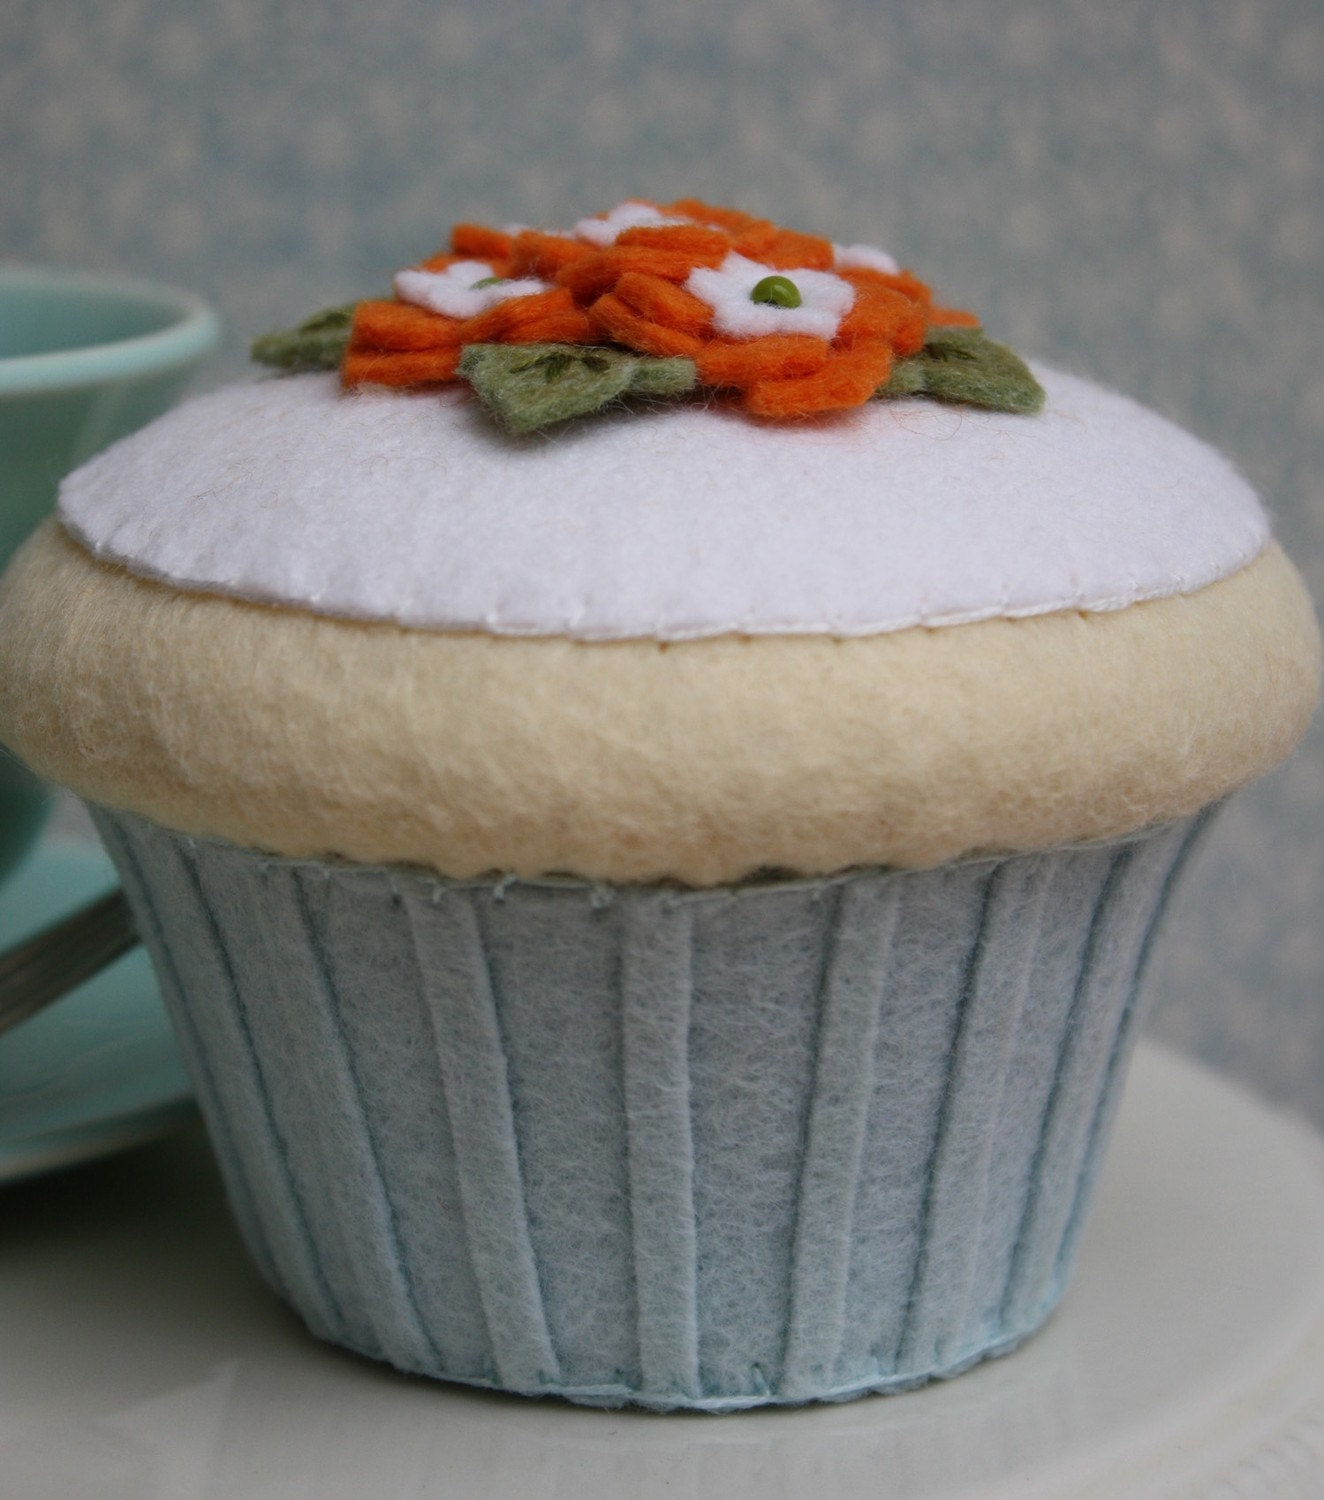 Felt Vanilla Cupcake With Aqua And Orange Flowers